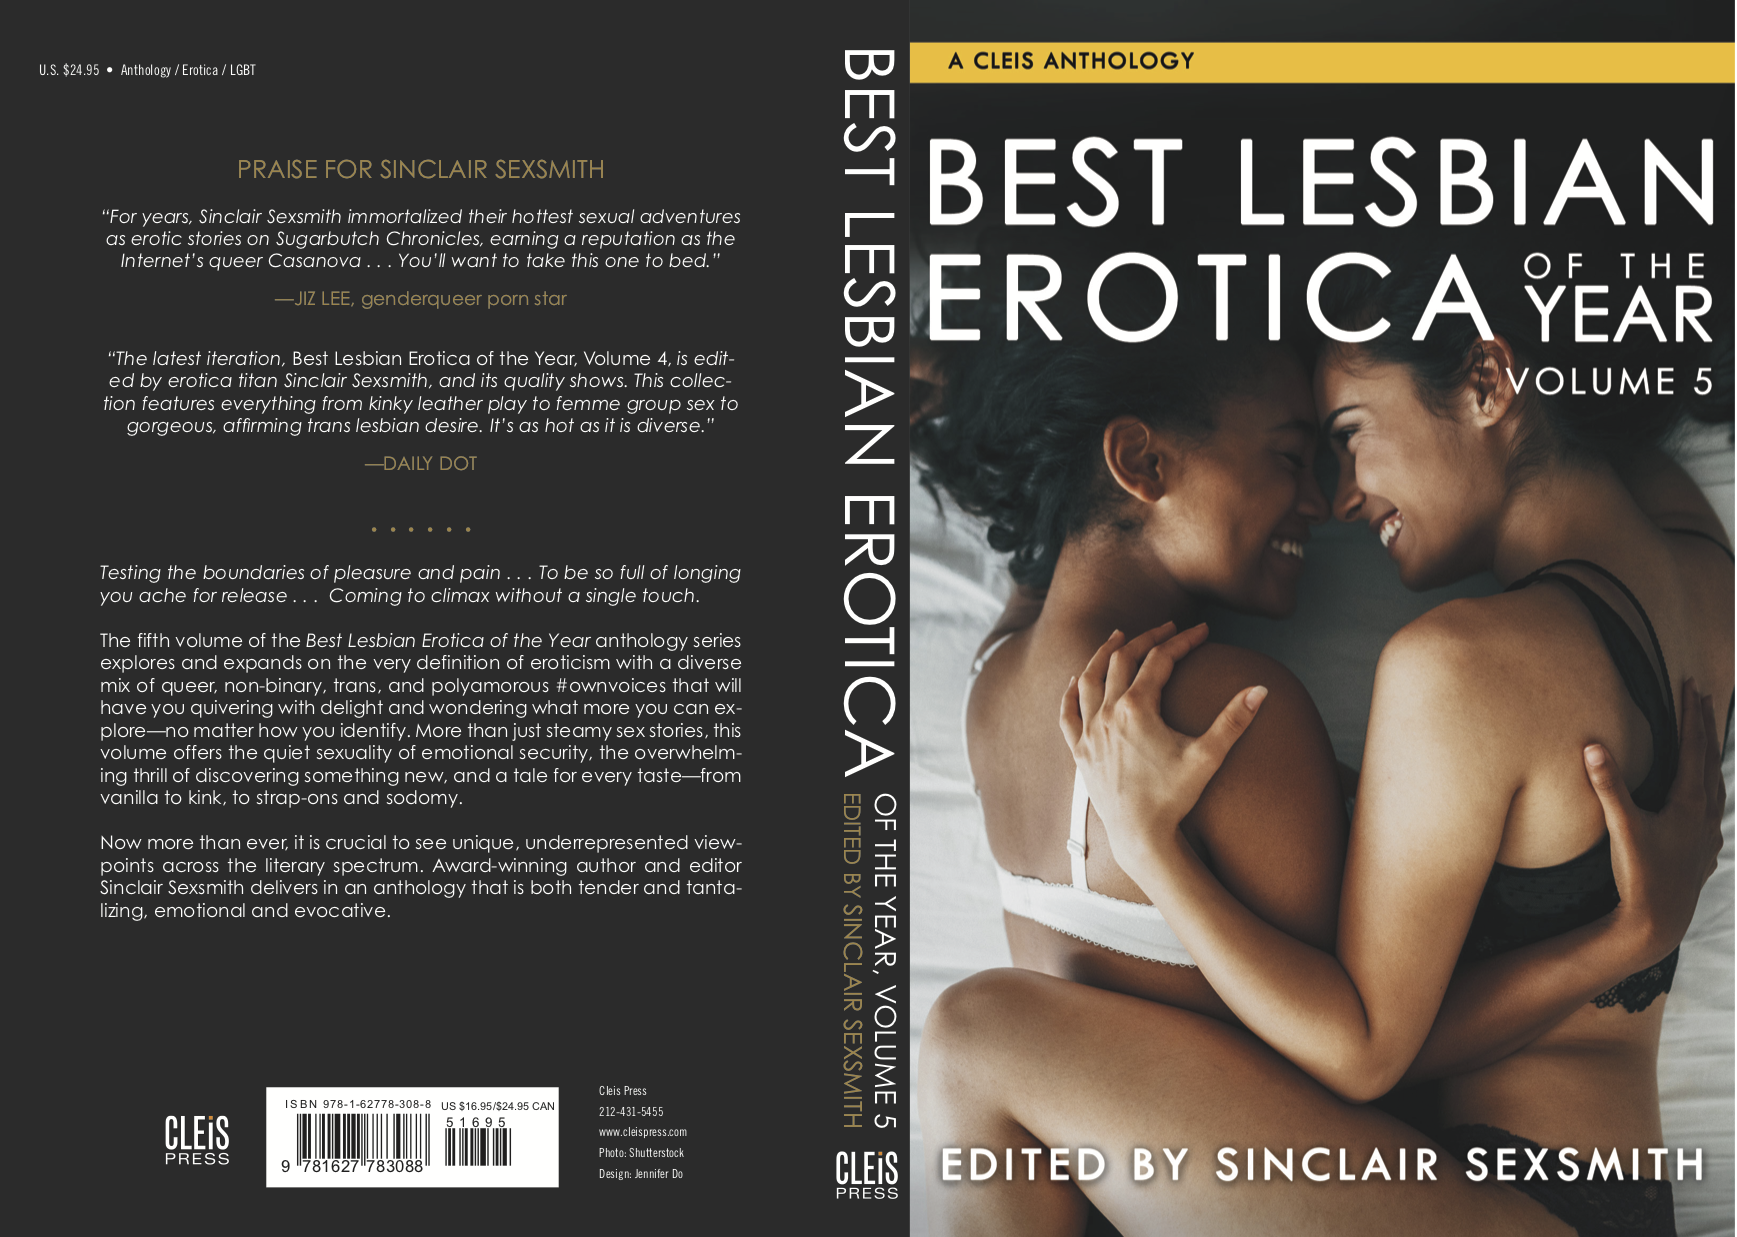 Lesbian Erotica Stories